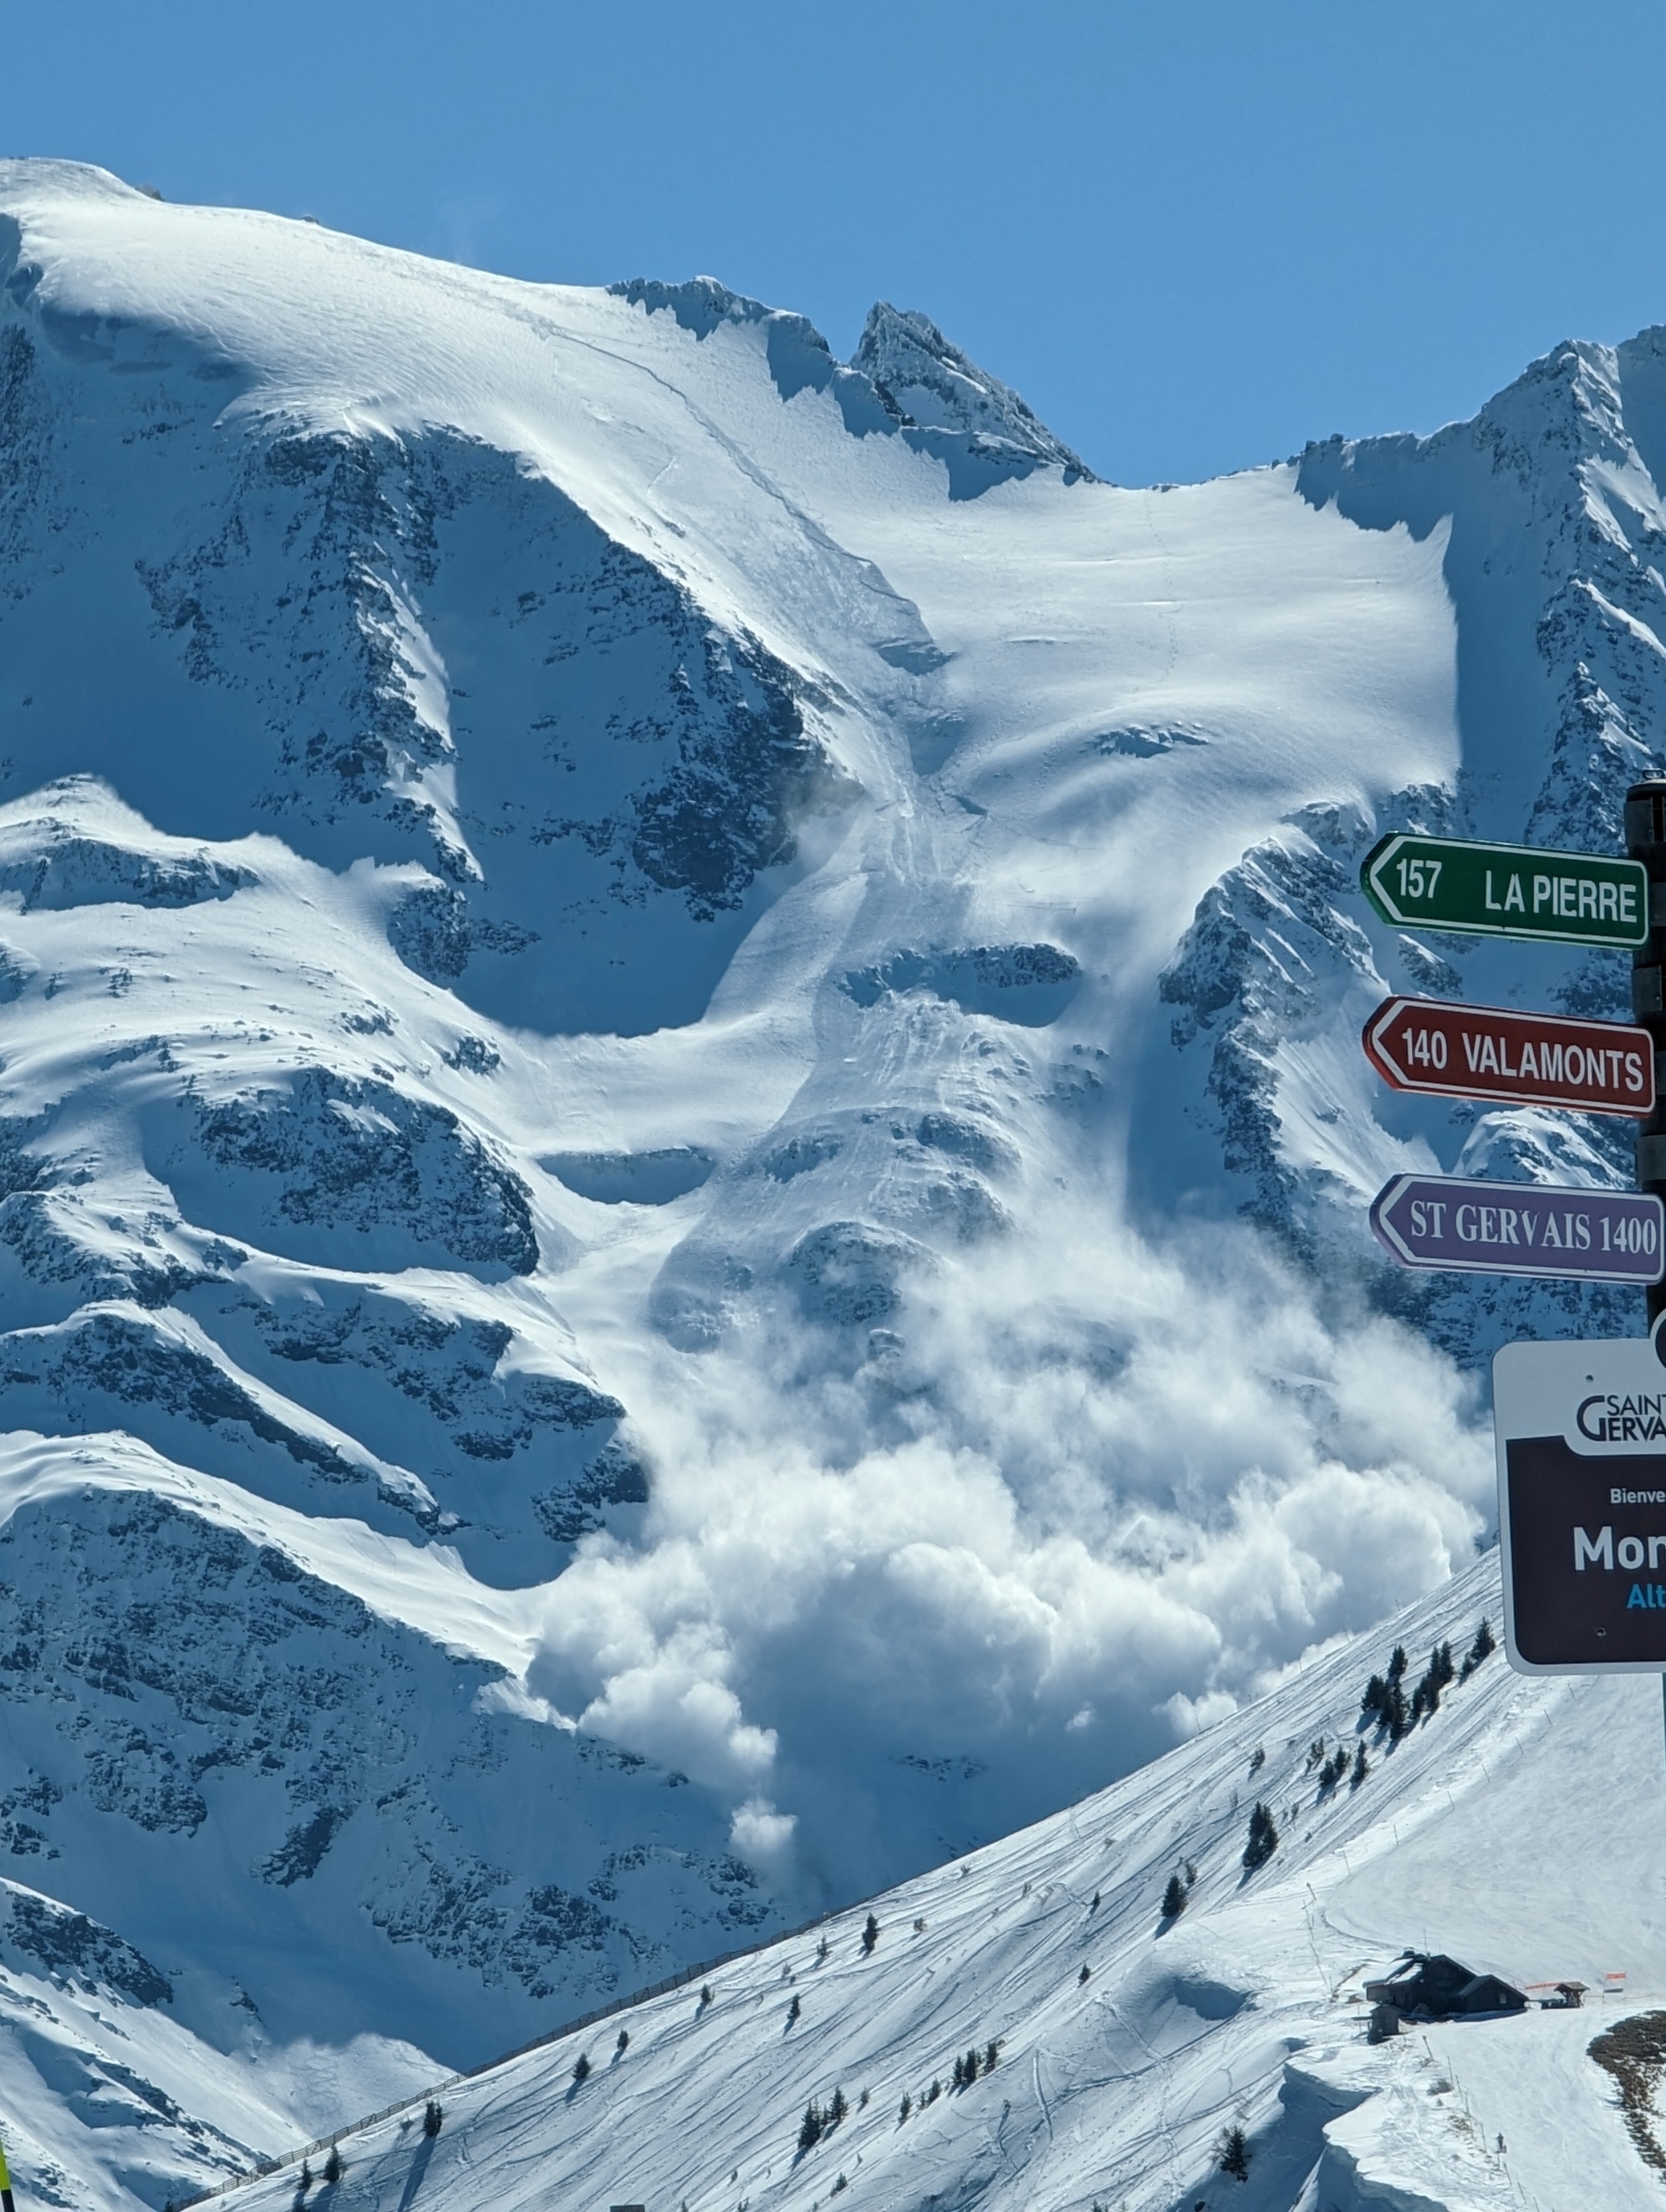 Tragedy struck in popular ski resort